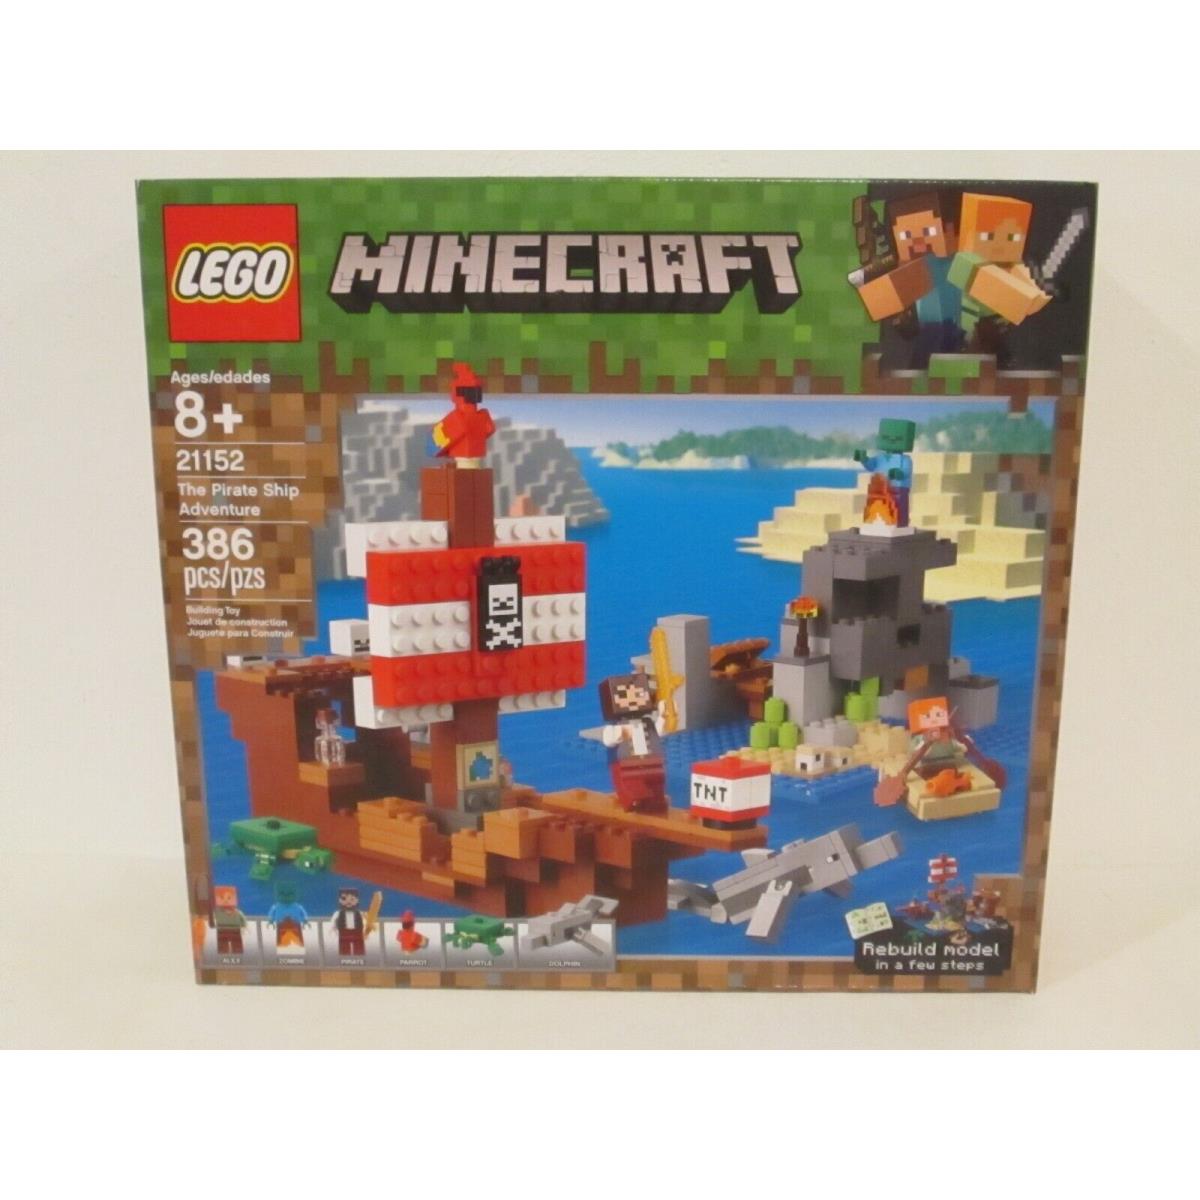 Lego Minecraft Set 21152 The Pirate Ship Adventure